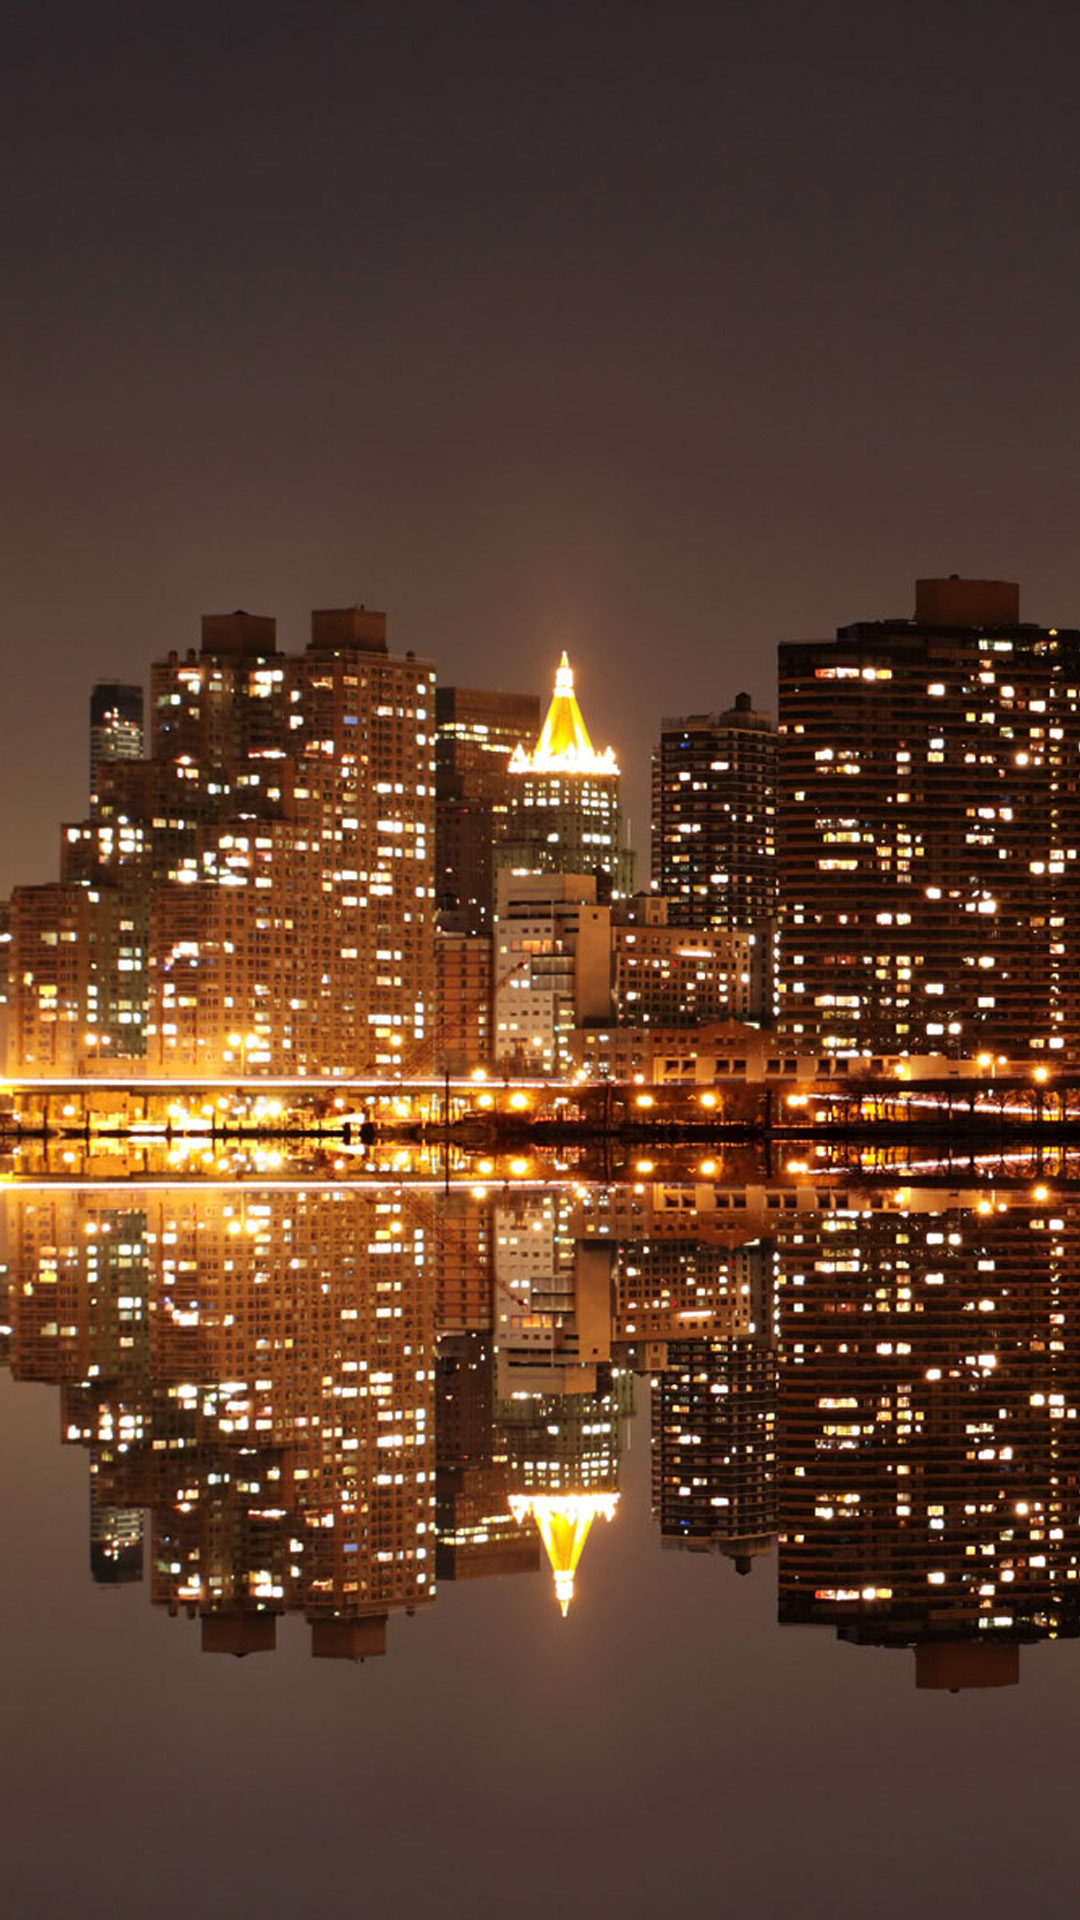 HD City Reflection At Night iPhone 6 Plus HD Wallpaper